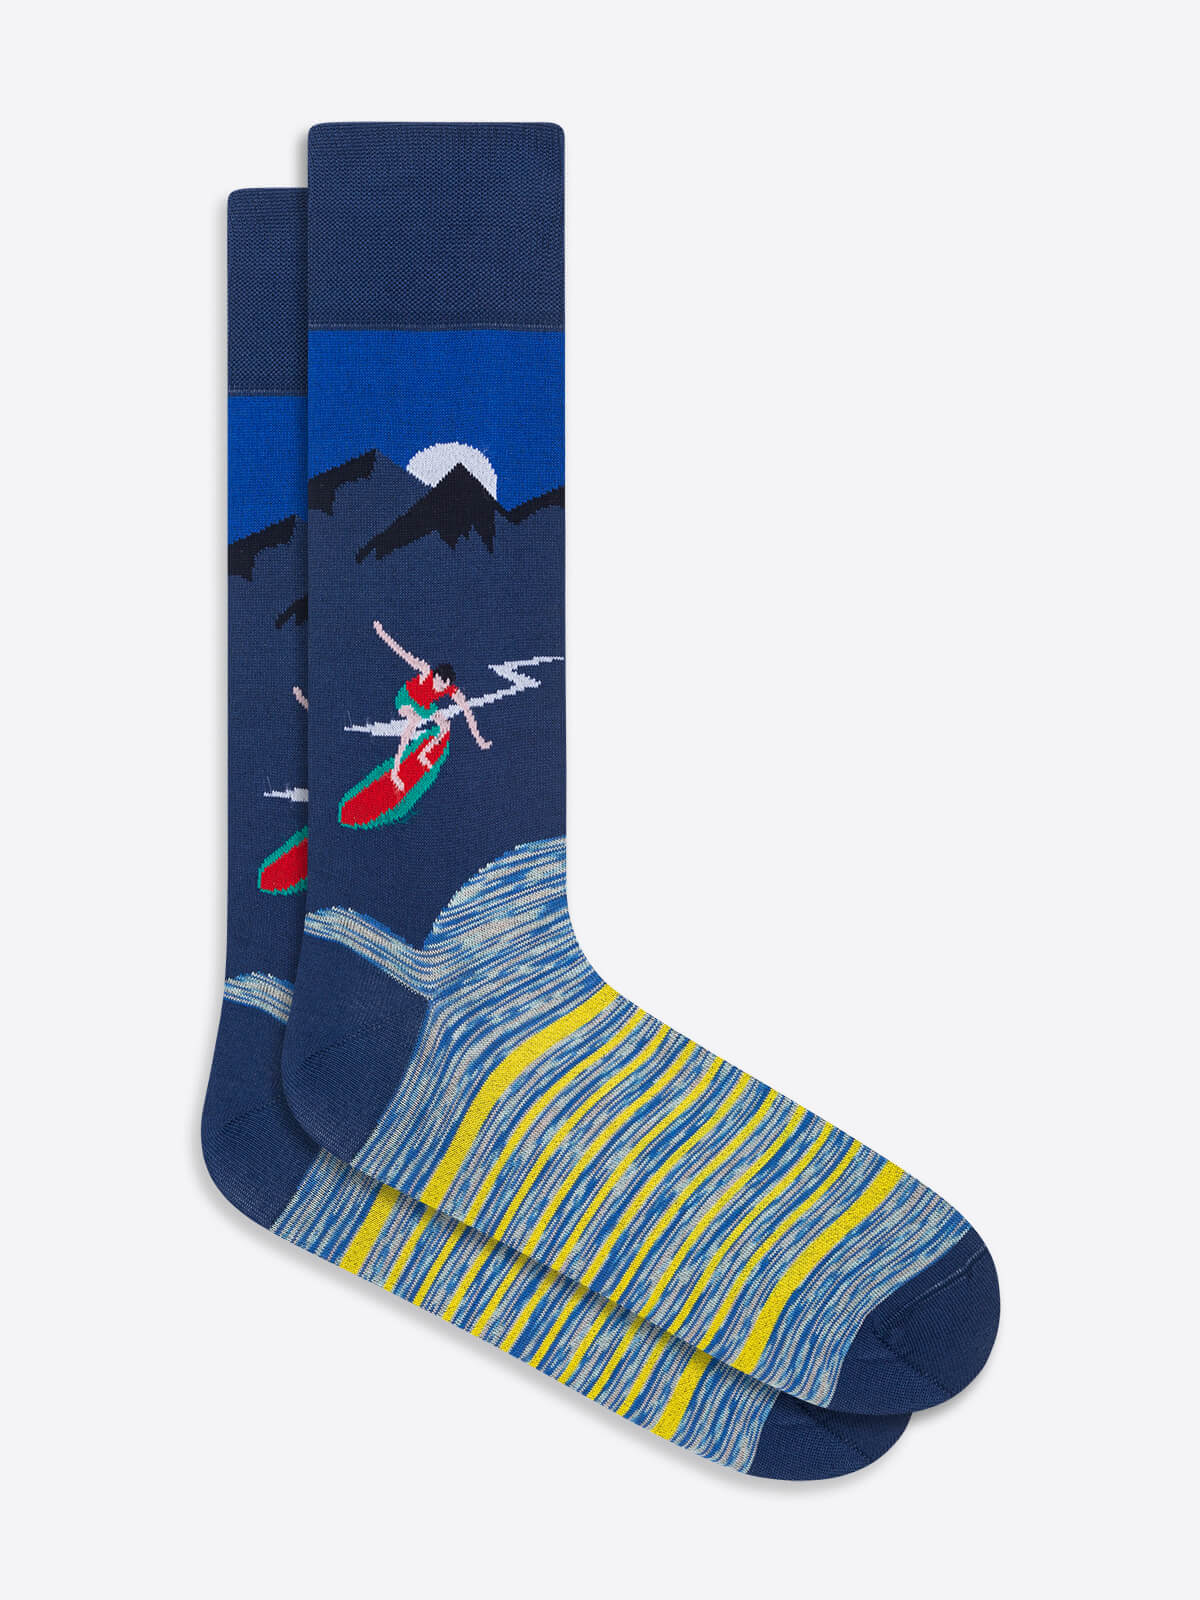 Surfer Mid-Calf Socks